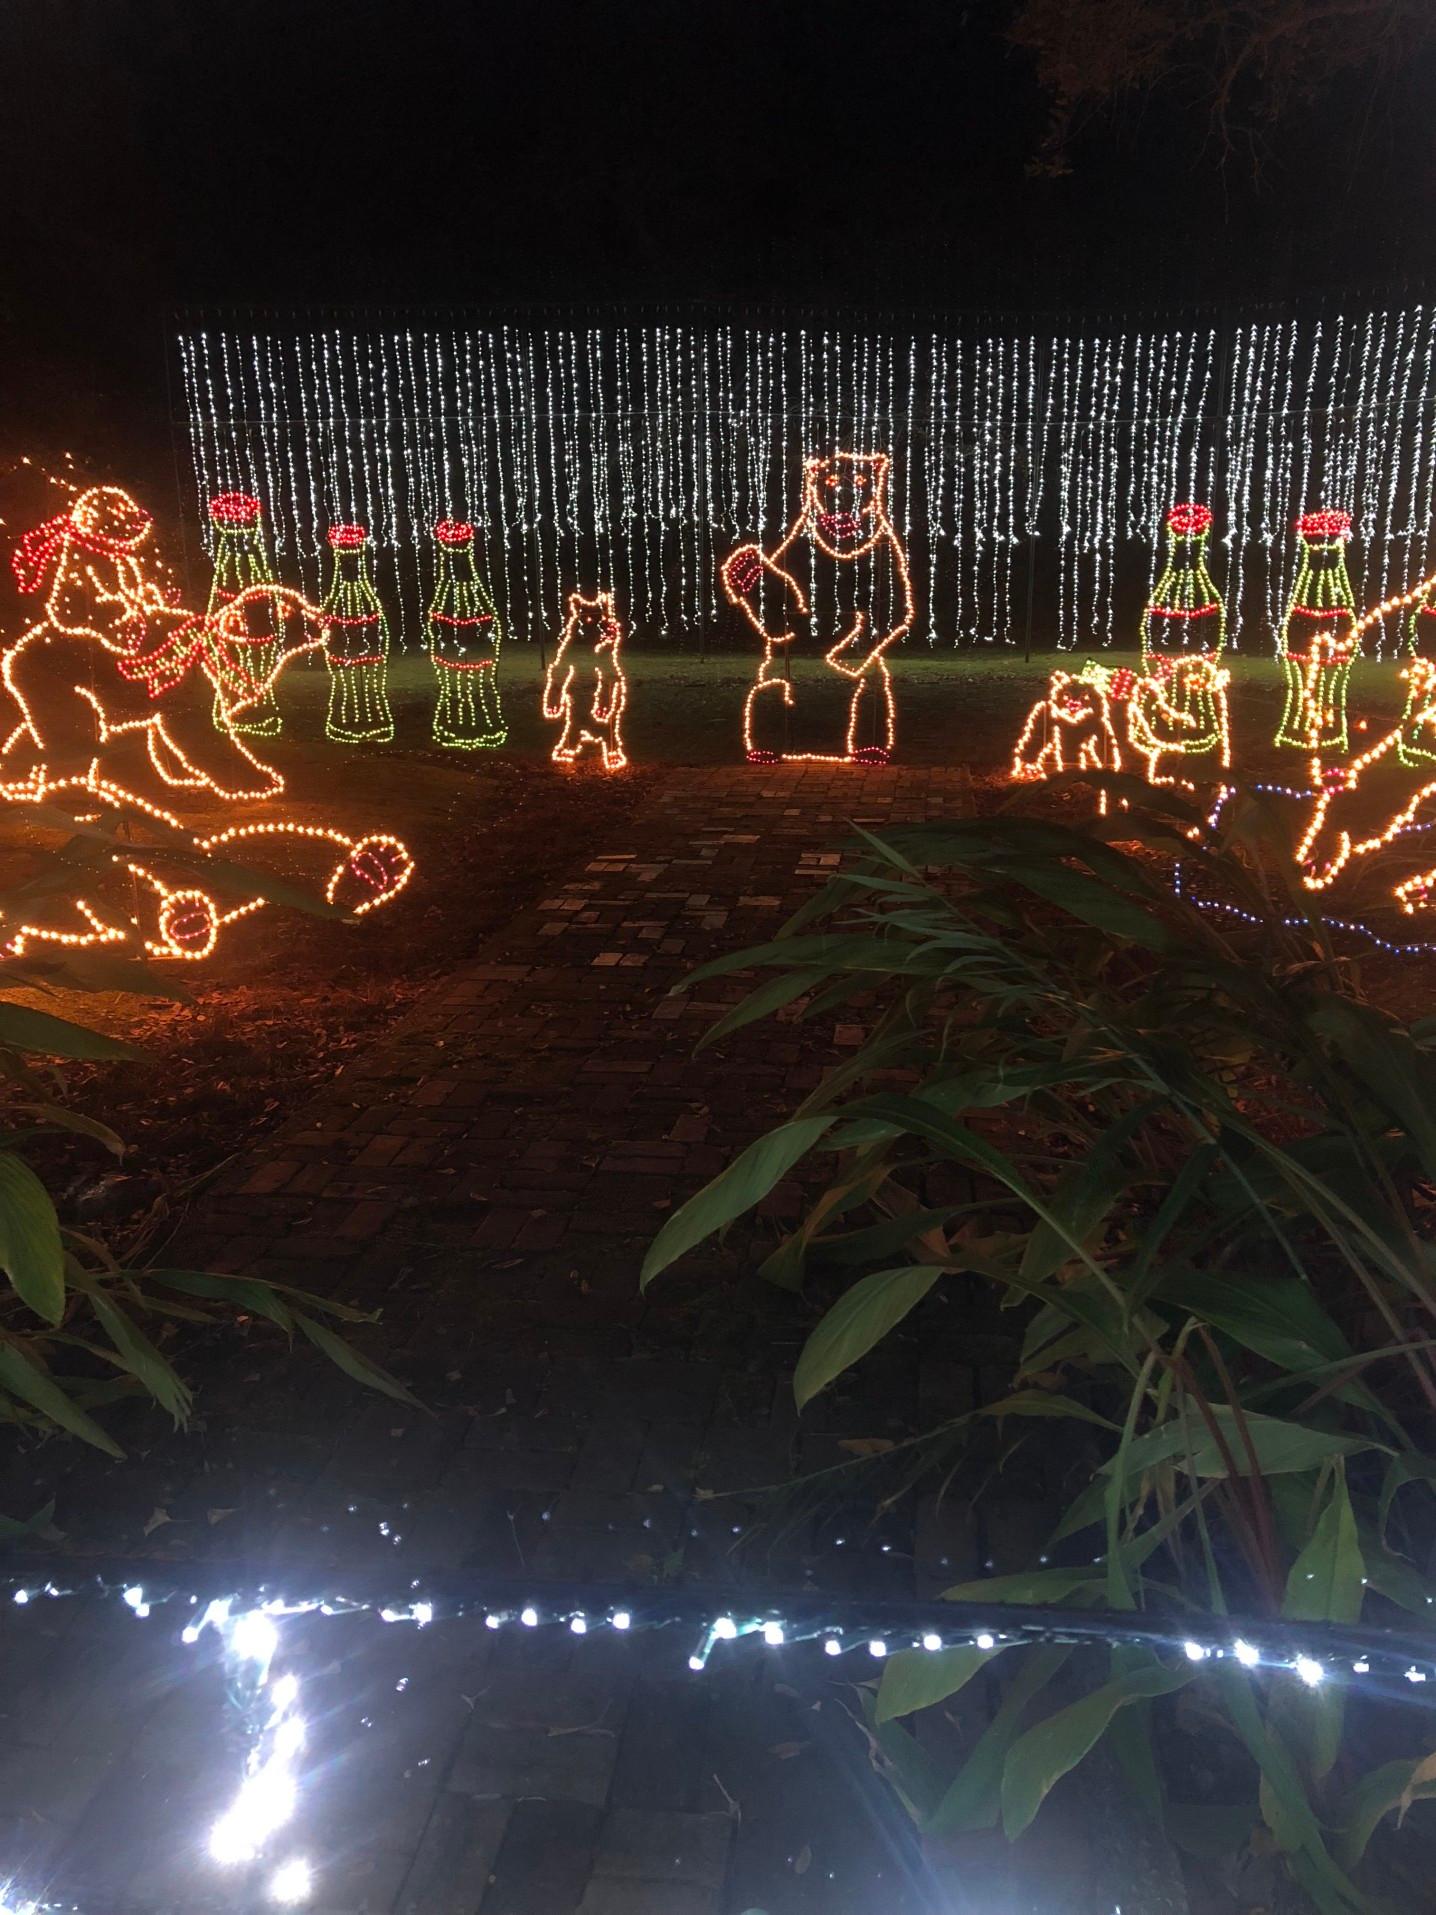 Magic Christmas in Lights, Theodore, Alabama